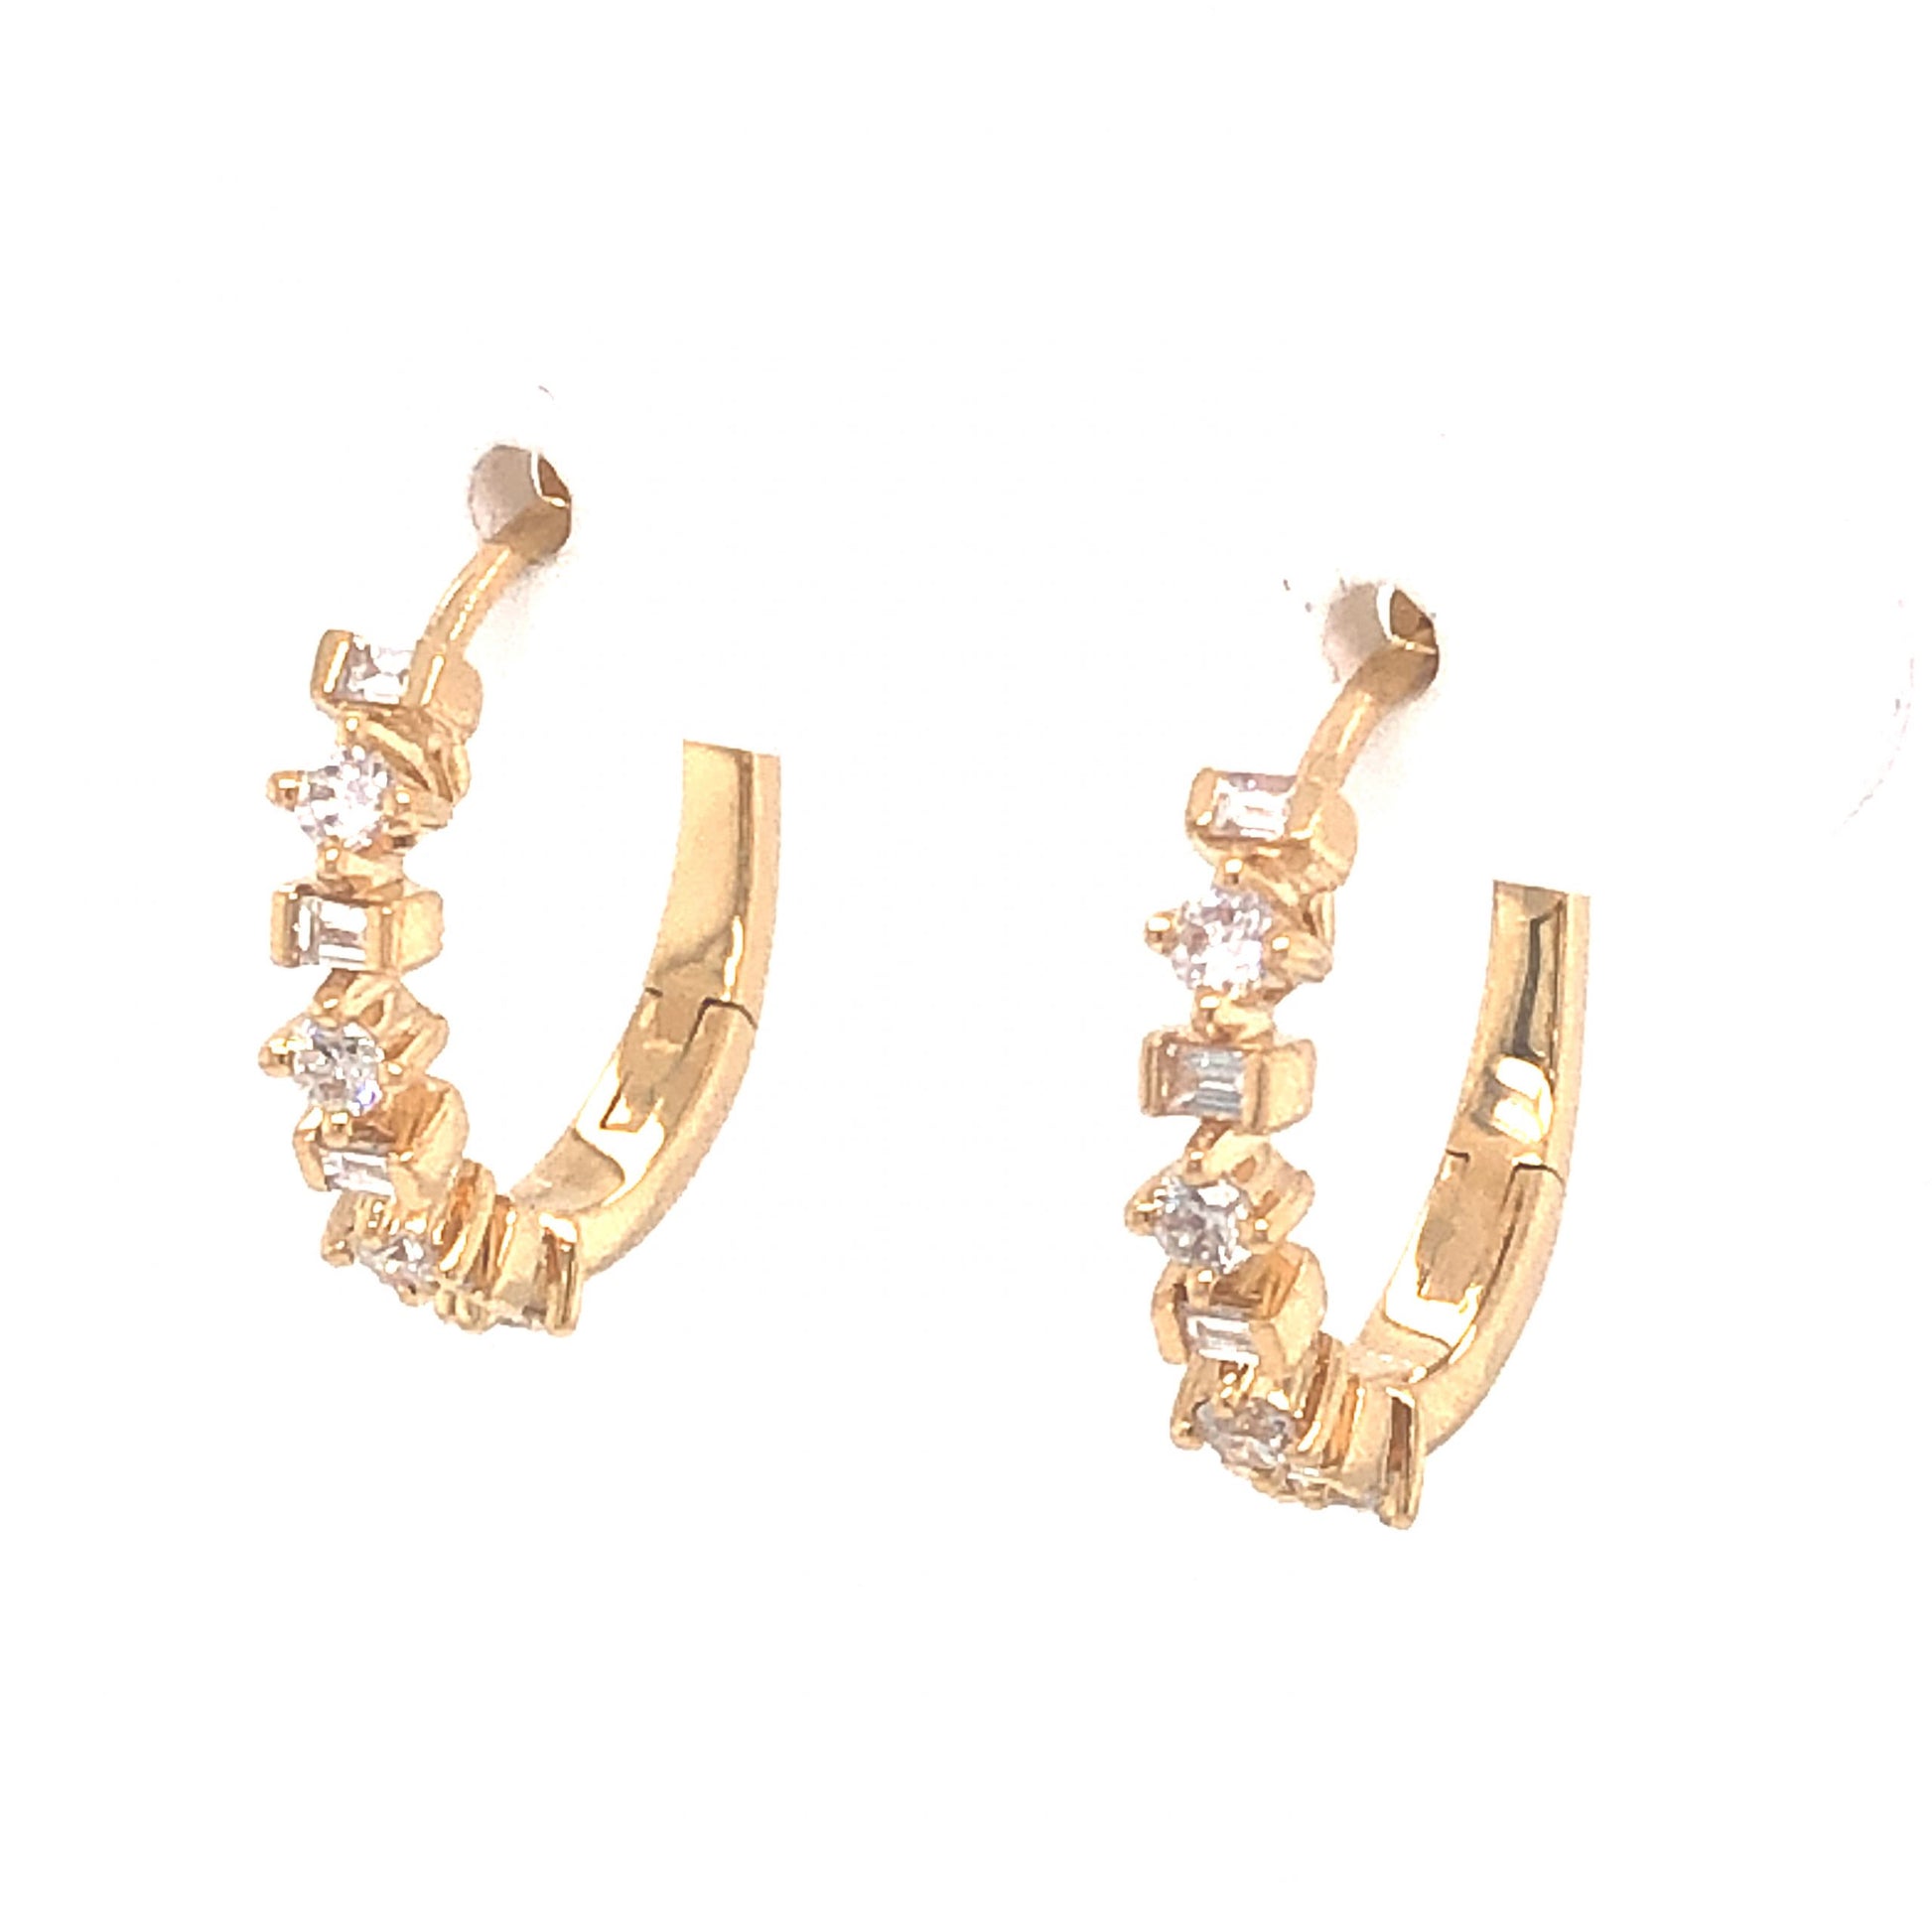 .34 Carat Diamond Hoop Earrings in 18K Yellow GoldComposition: 18 Karat Yellow GoldTotal Diamond Weight: .34 ctTotal Gram Weight: 3.6 gInscription: 18k 750